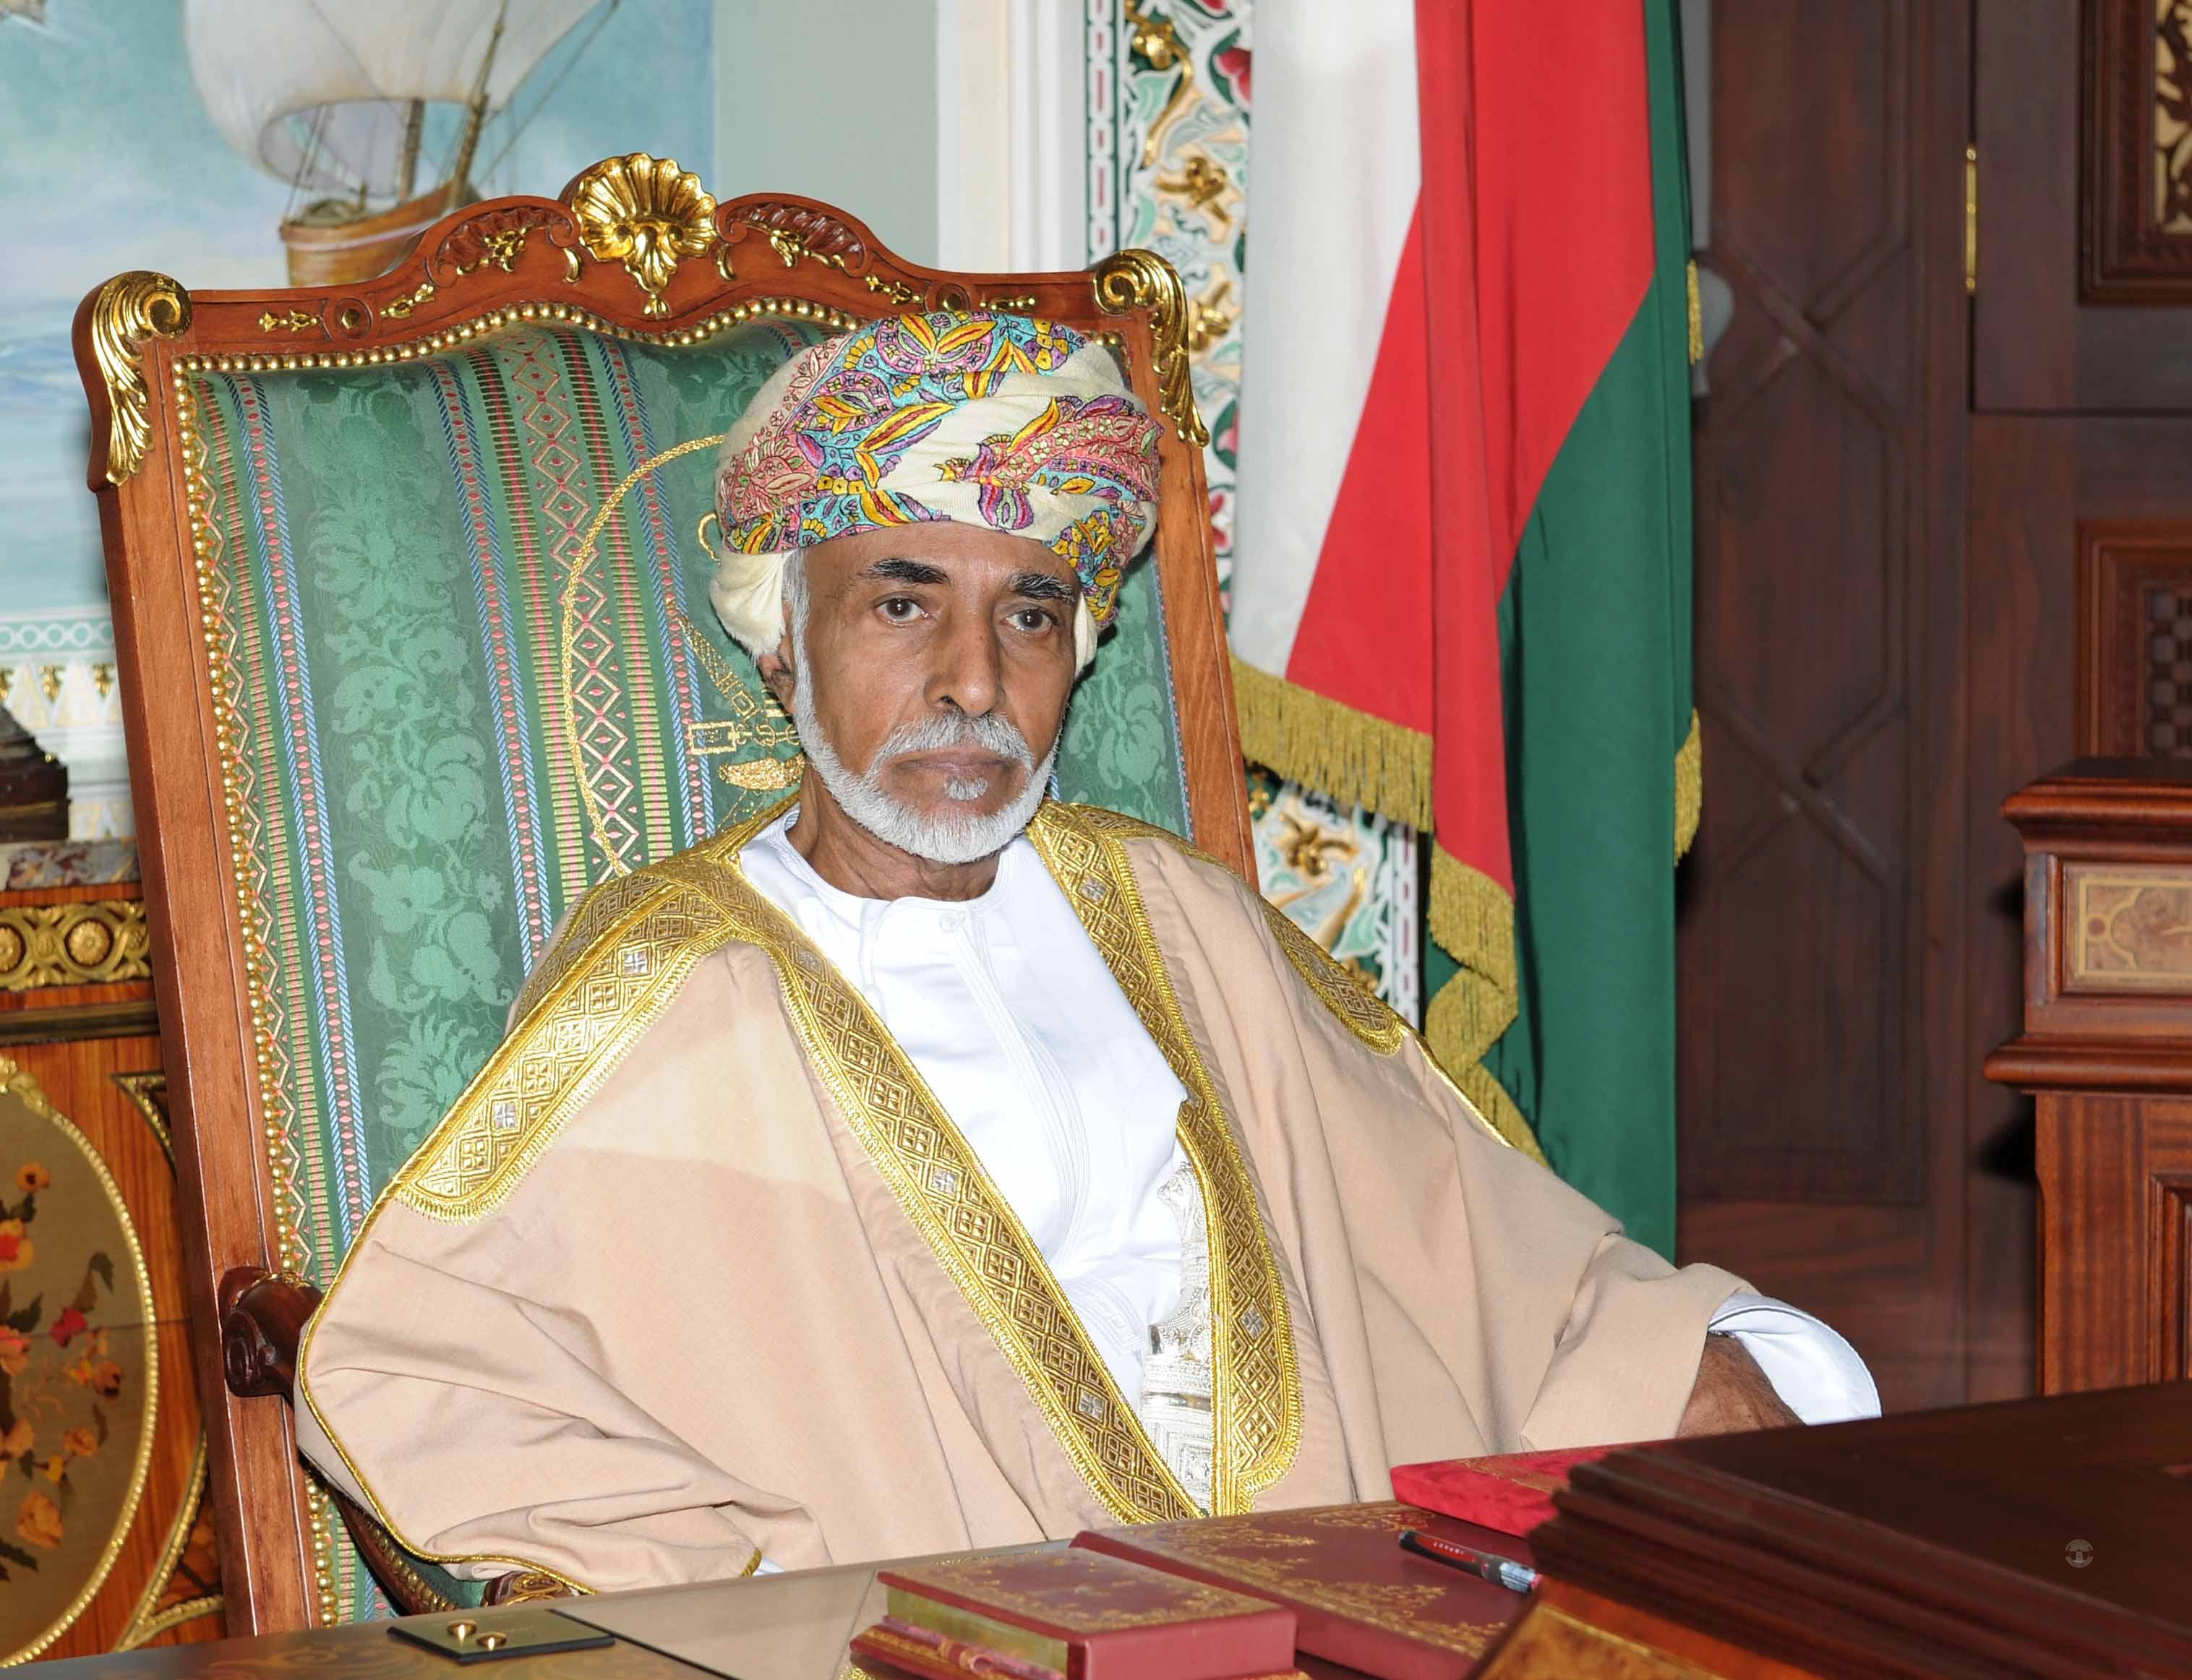 His Majesty Sultan Qaboos sends greetings to Qatar, Mozambique, Slovenia, Croatia